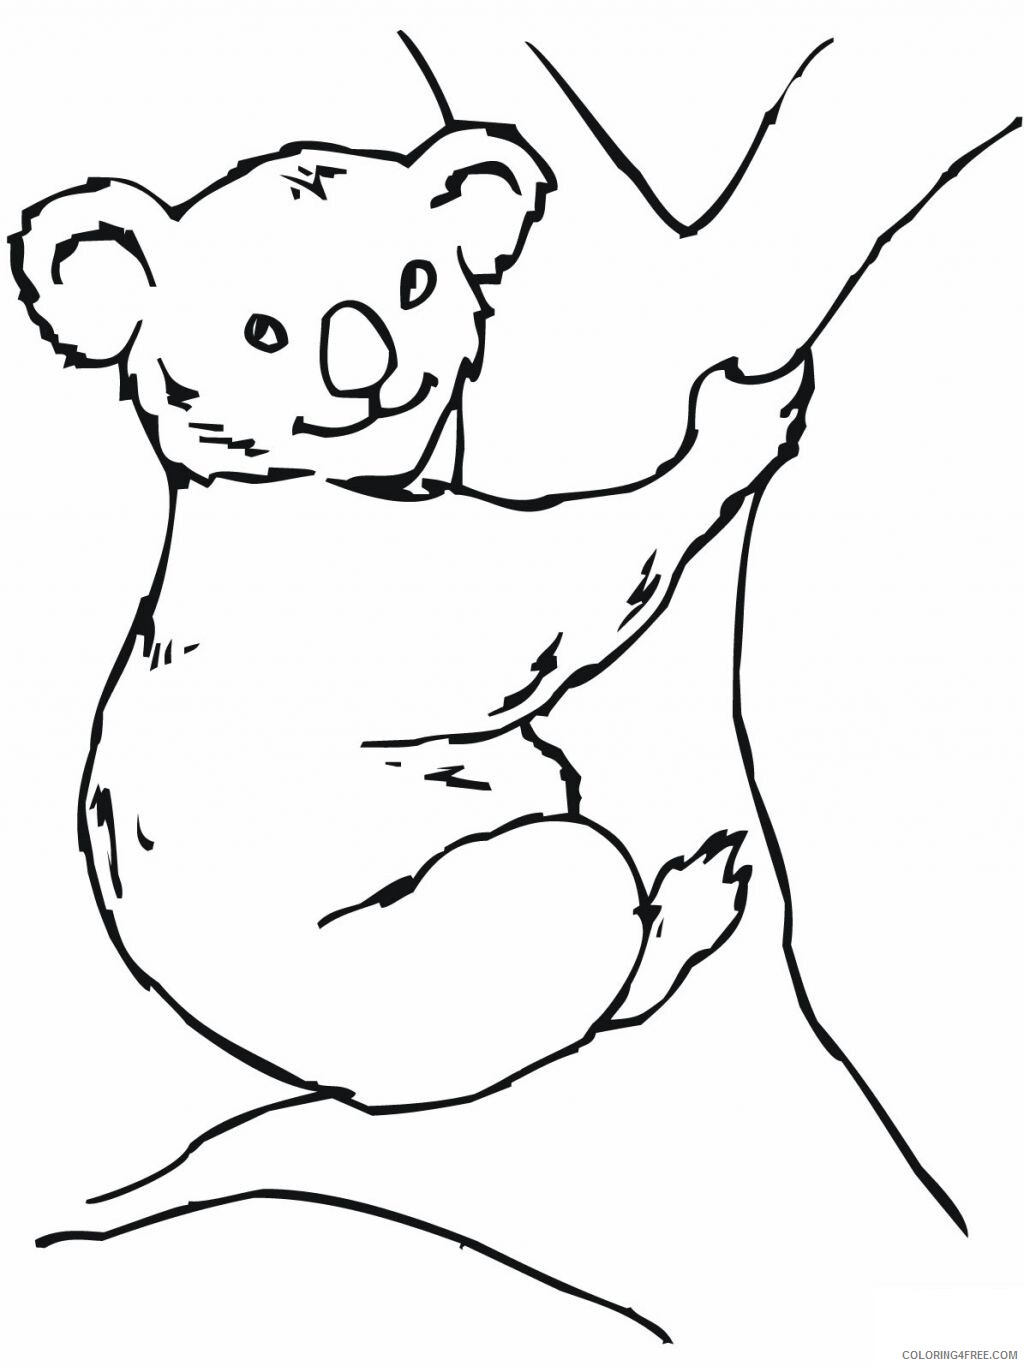 Bear Coloring Pages Animal Printable Sheets Koala Bear For Kids1 2021 0301 Coloring4free